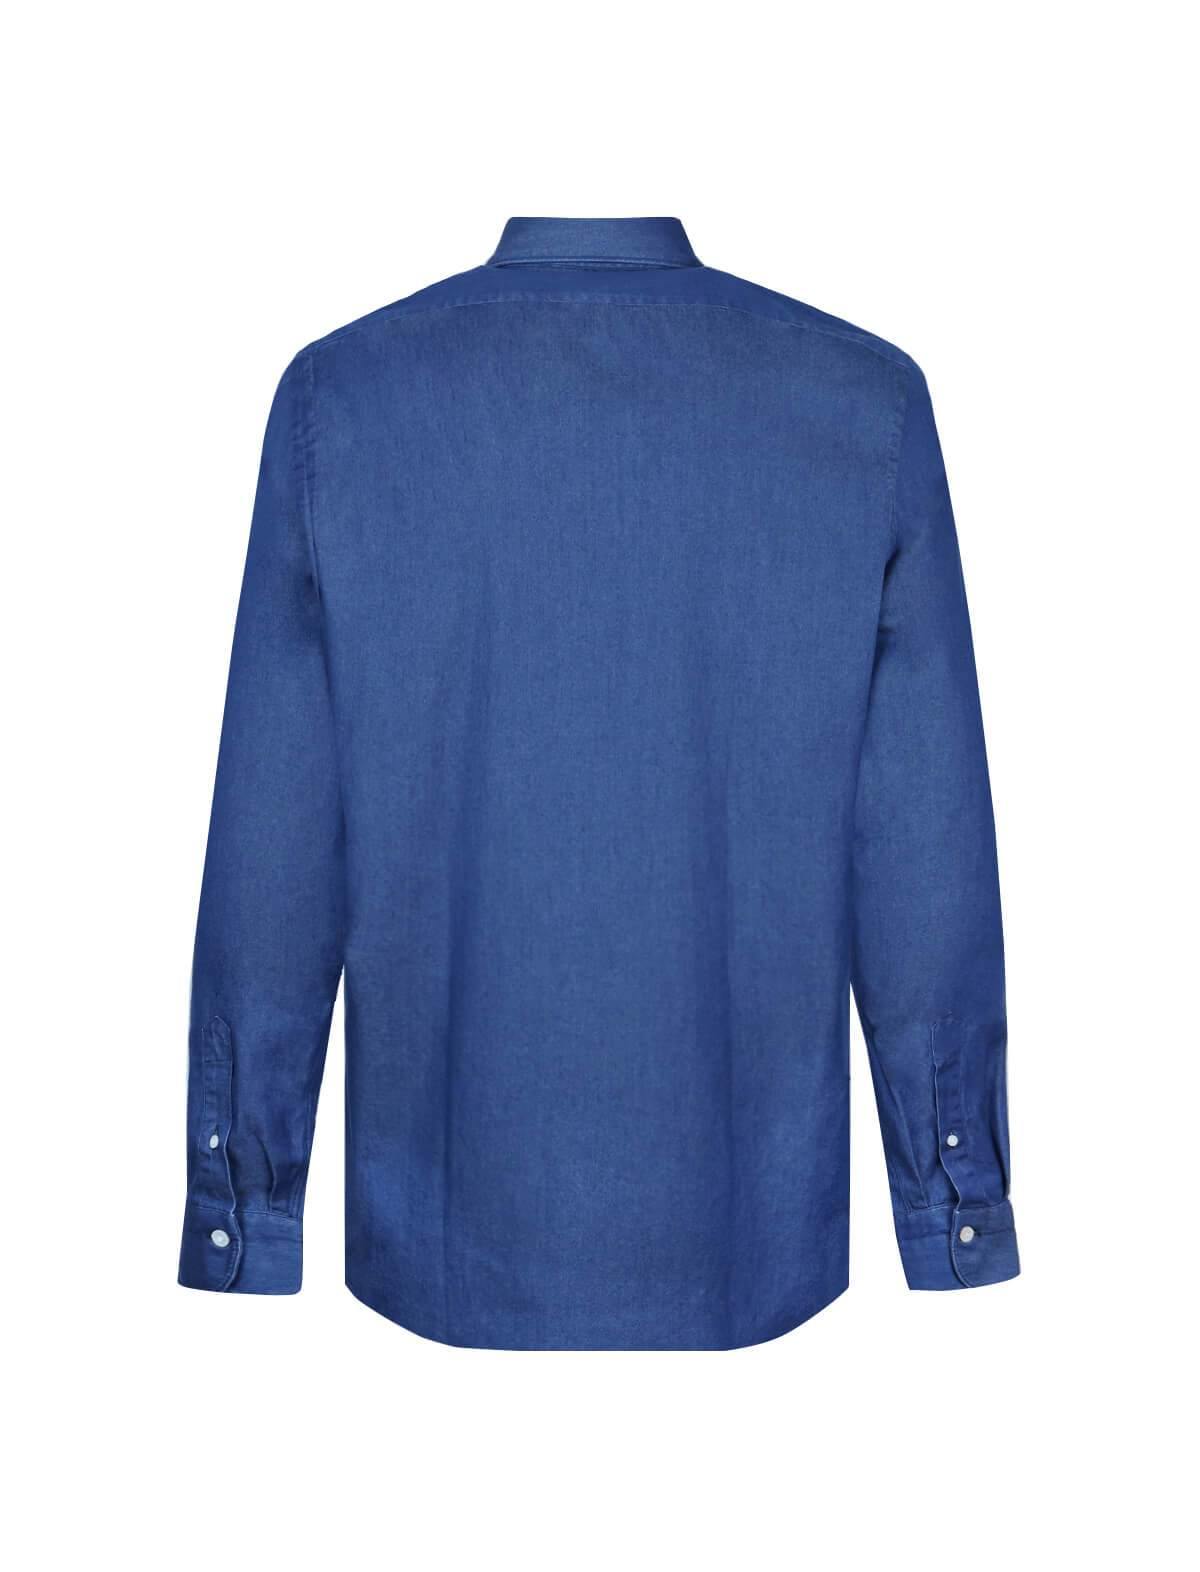 FINAMORE 1925 Tokyo Slim Fit Cotton Shirt in Indigo Blue | CLOSET Singapore